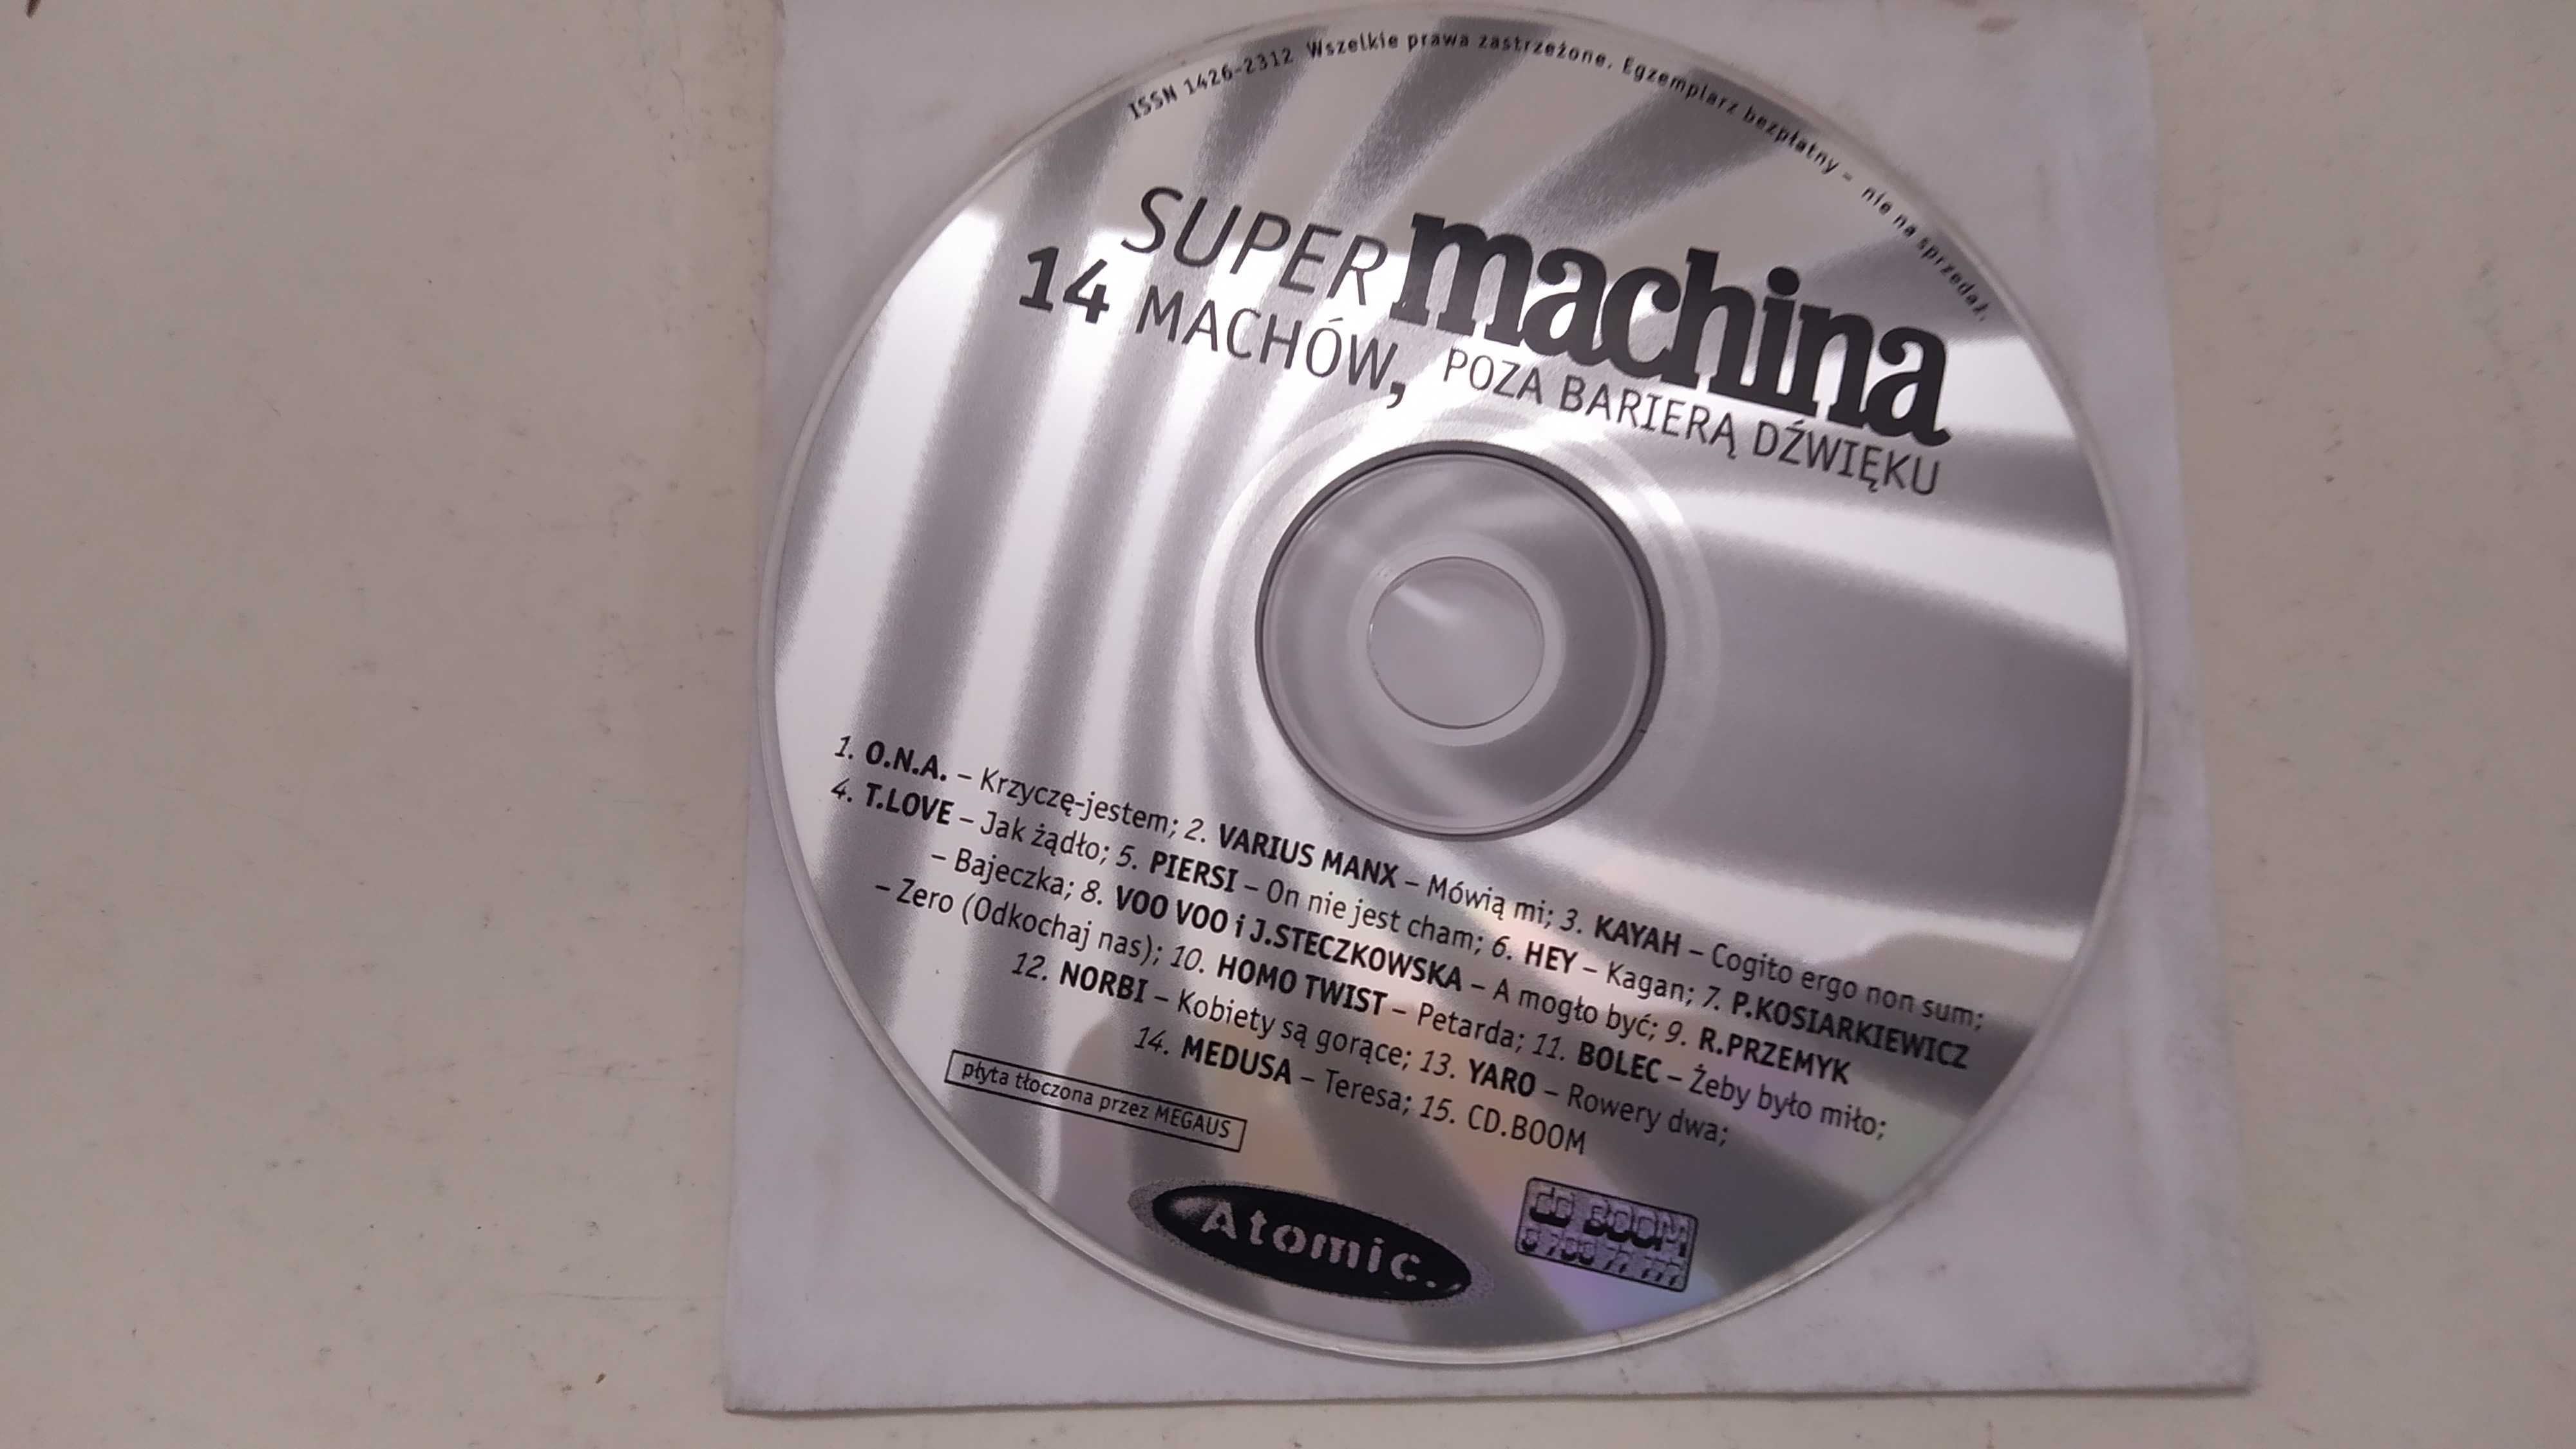 Super MACHINA 14 Machów Poza barierą dźwięku Yaro T.Love Voo Voo